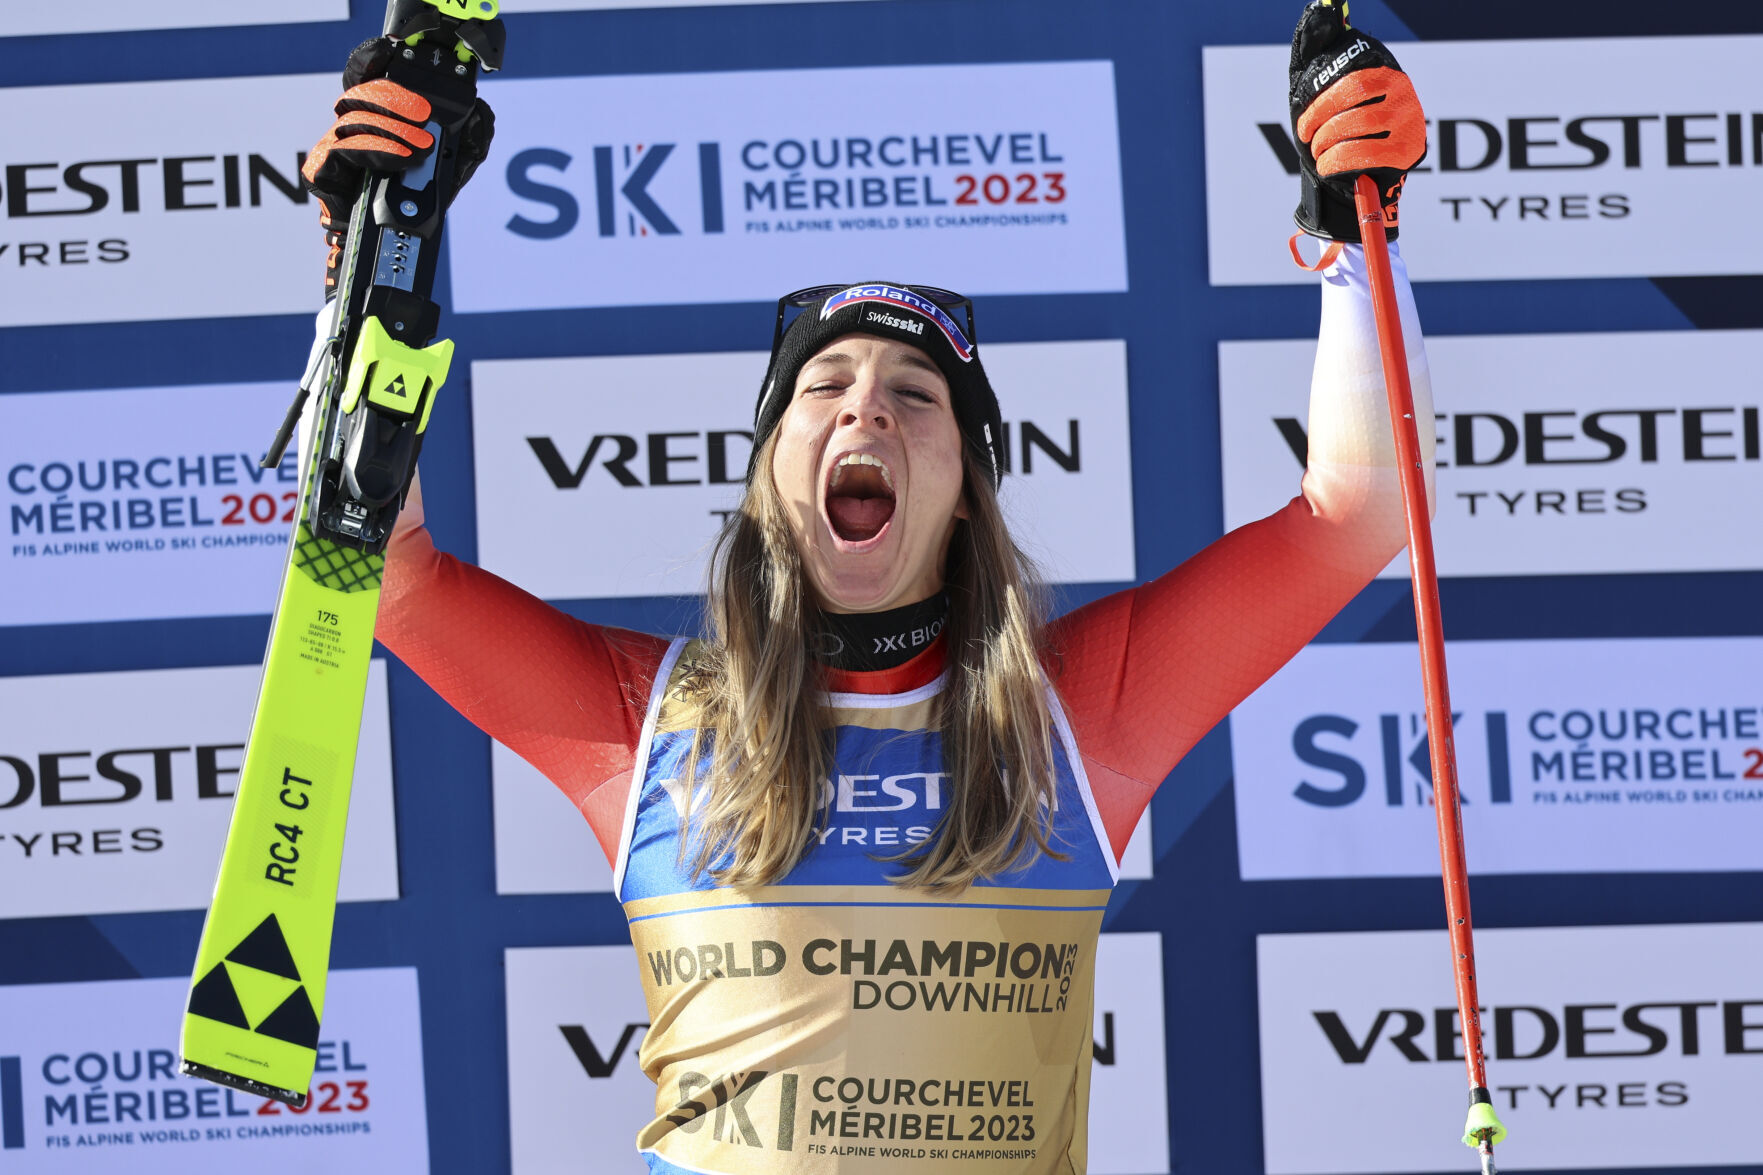 Jasmine Flurys downhill win at ski worlds aided by warm weather